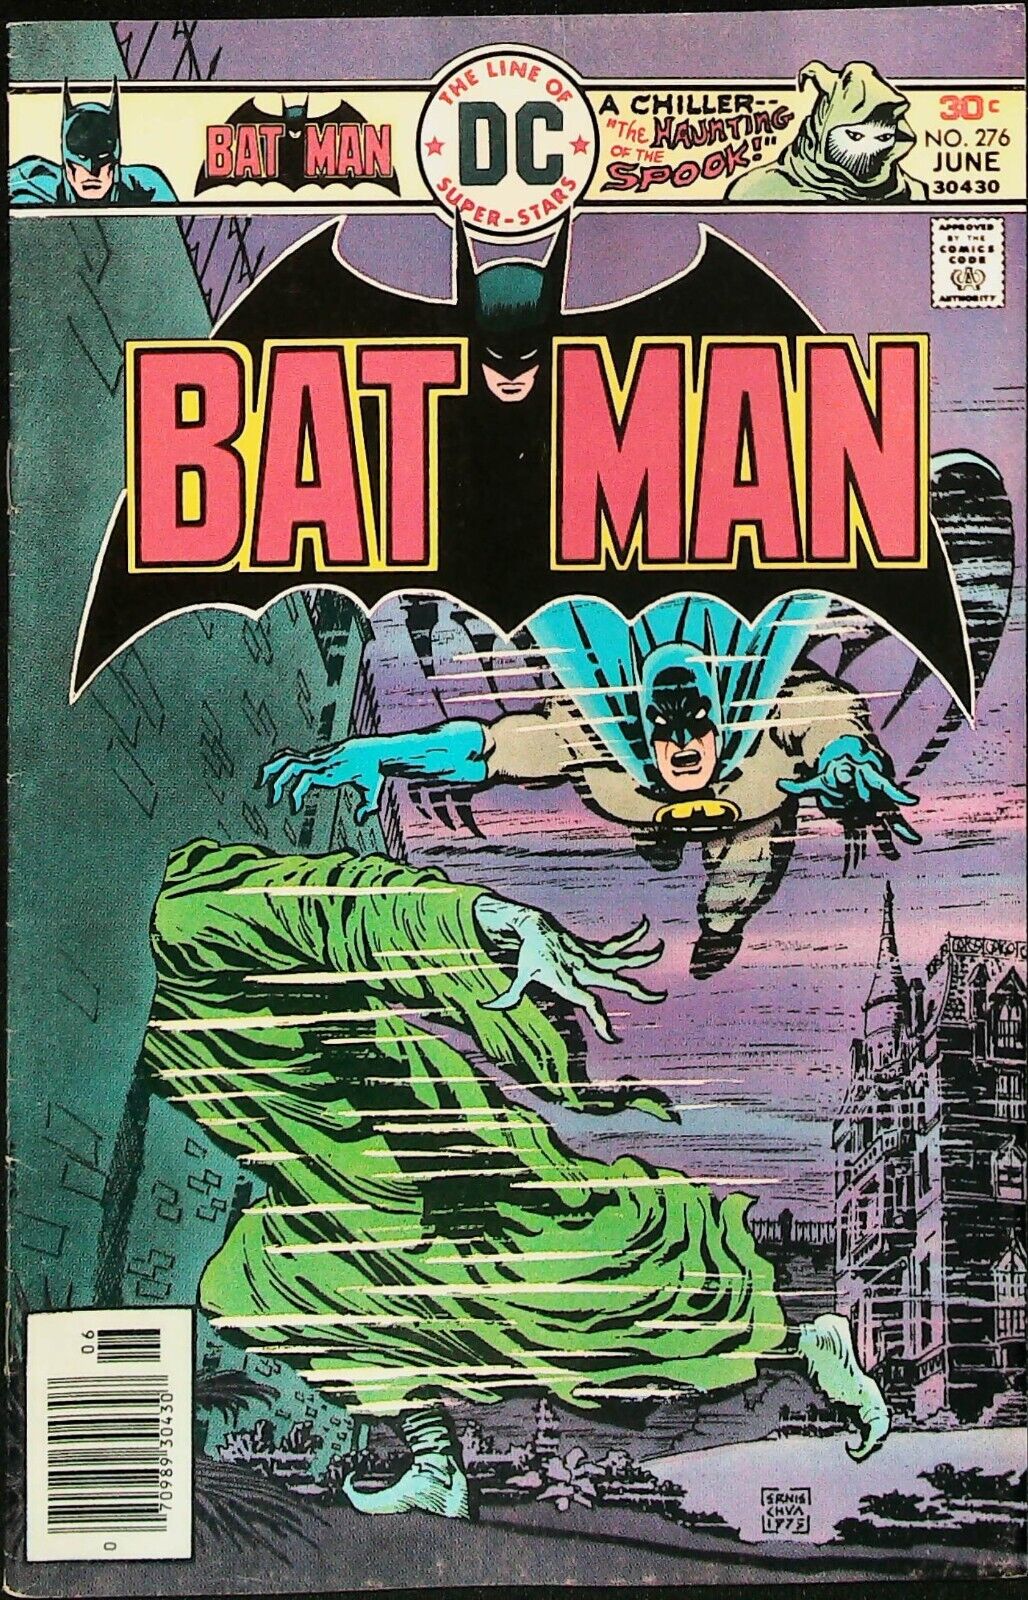 Batman #276 Vol 1 (1976) - DC - Spook Appearance - Very Fine Range